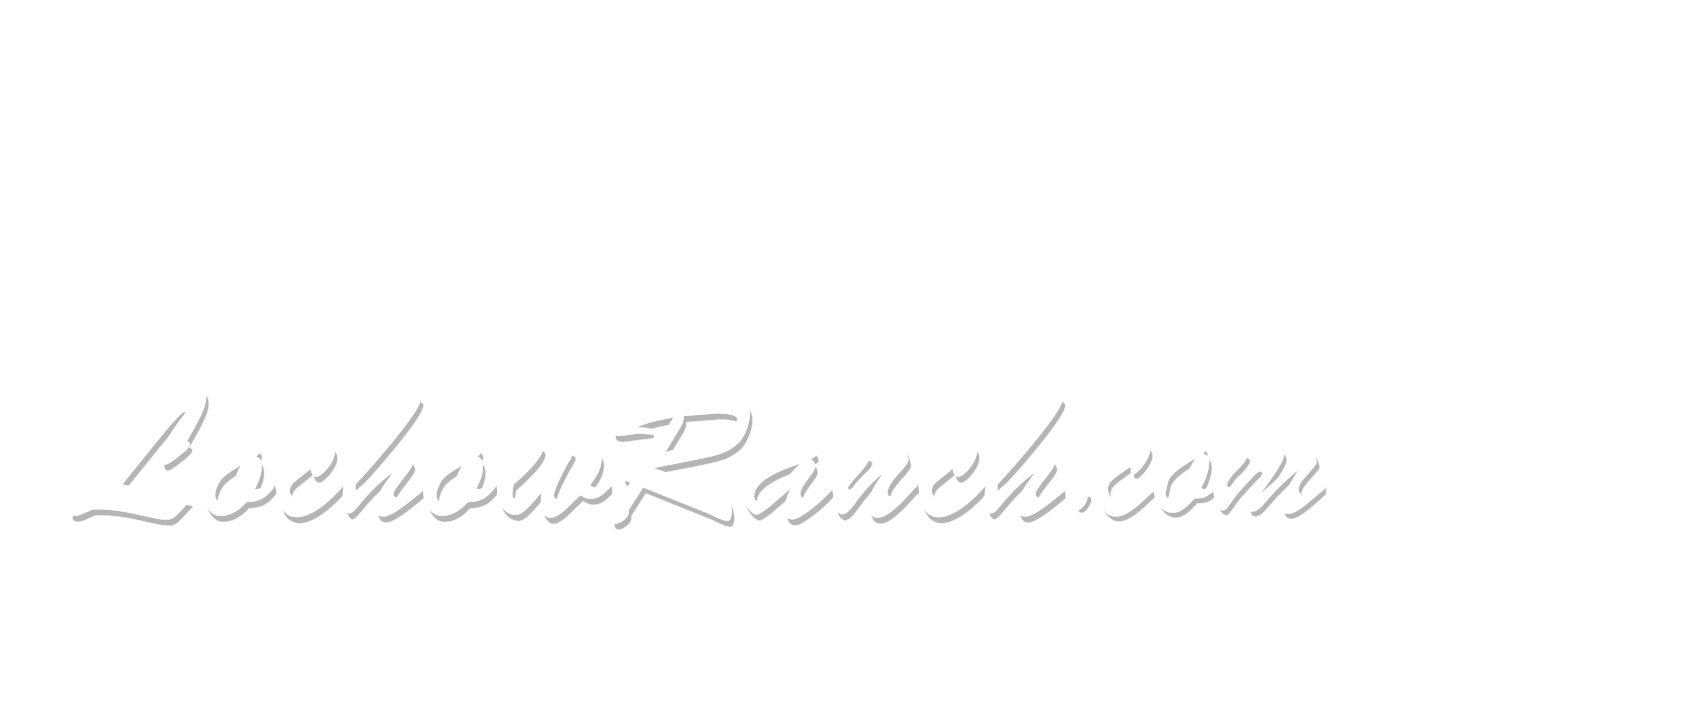 Lochow Ranch Pond & Lake Management